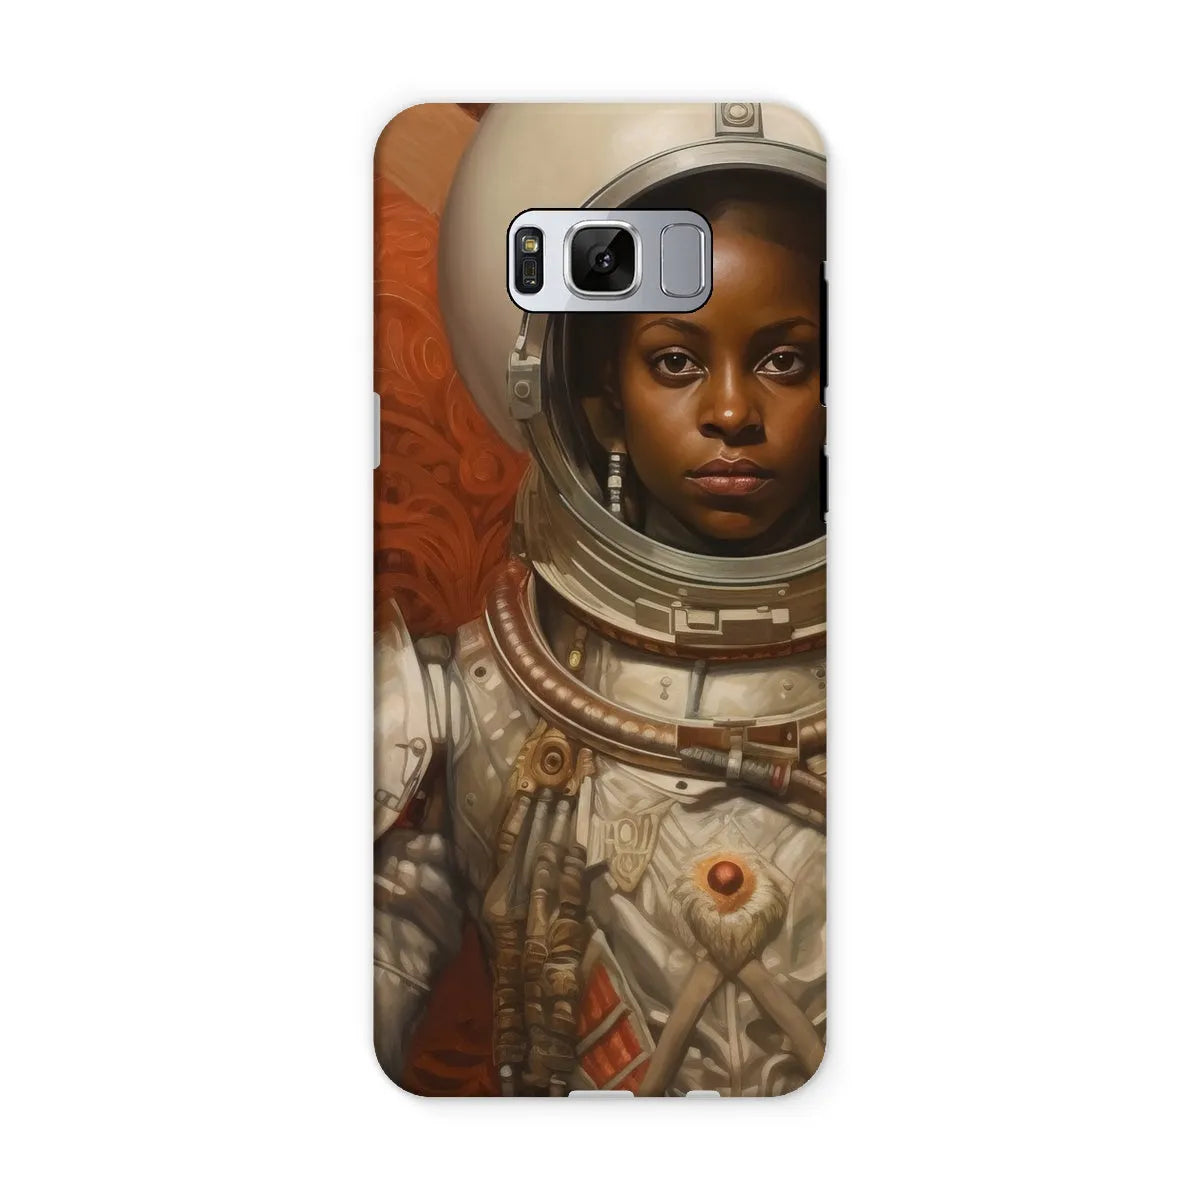 Ava - Black Lesbian Astronaut Aesthetic Phone Case - Samsung Galaxy S8 / Matte - Mobile Phone Cases - Aesthetic Art